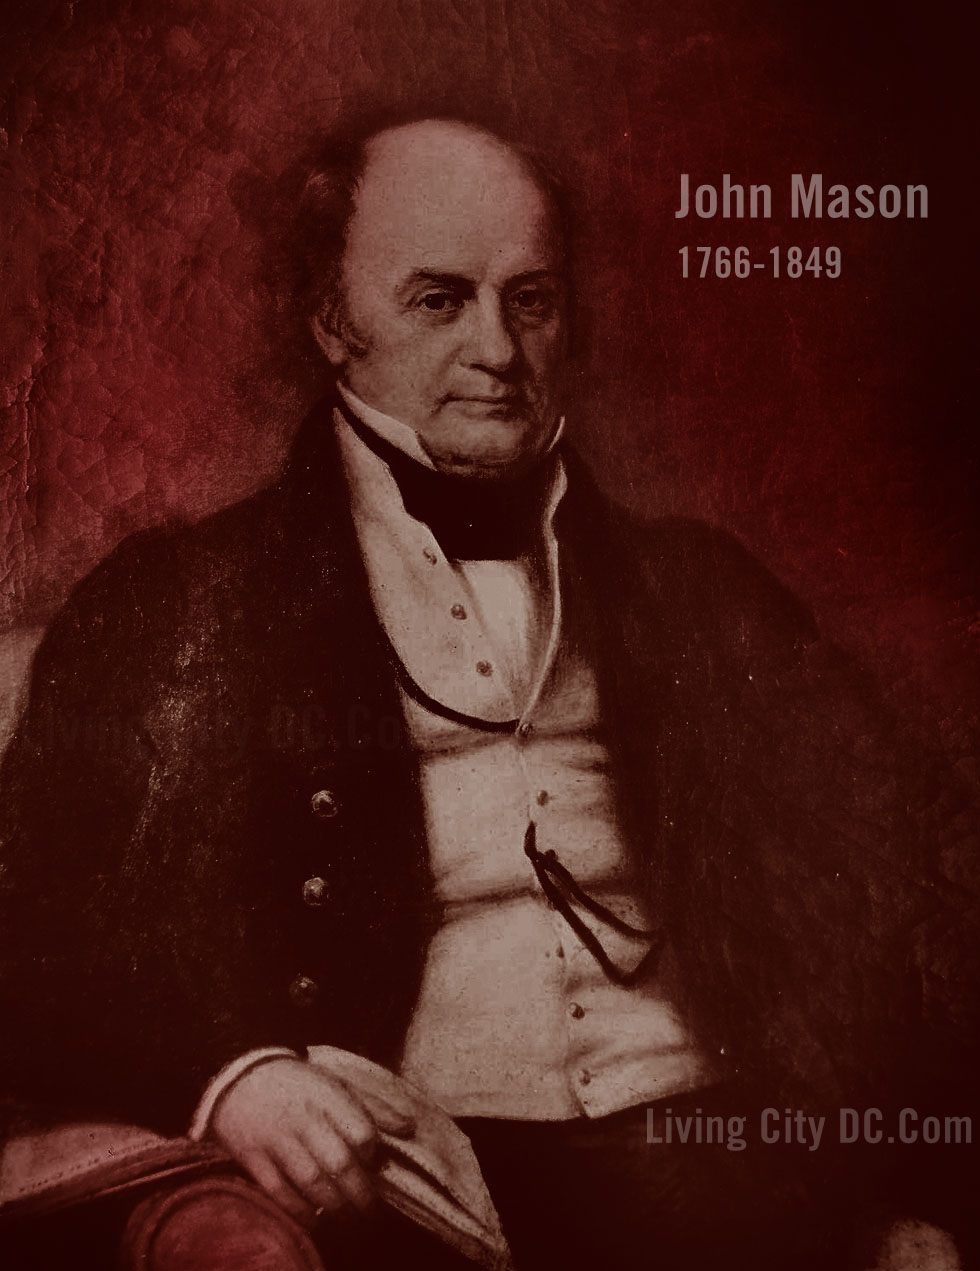 John Mason son of George Mason Founding Father - was owner of Roosevelt Island AKA Analostan Island in the Potomac River